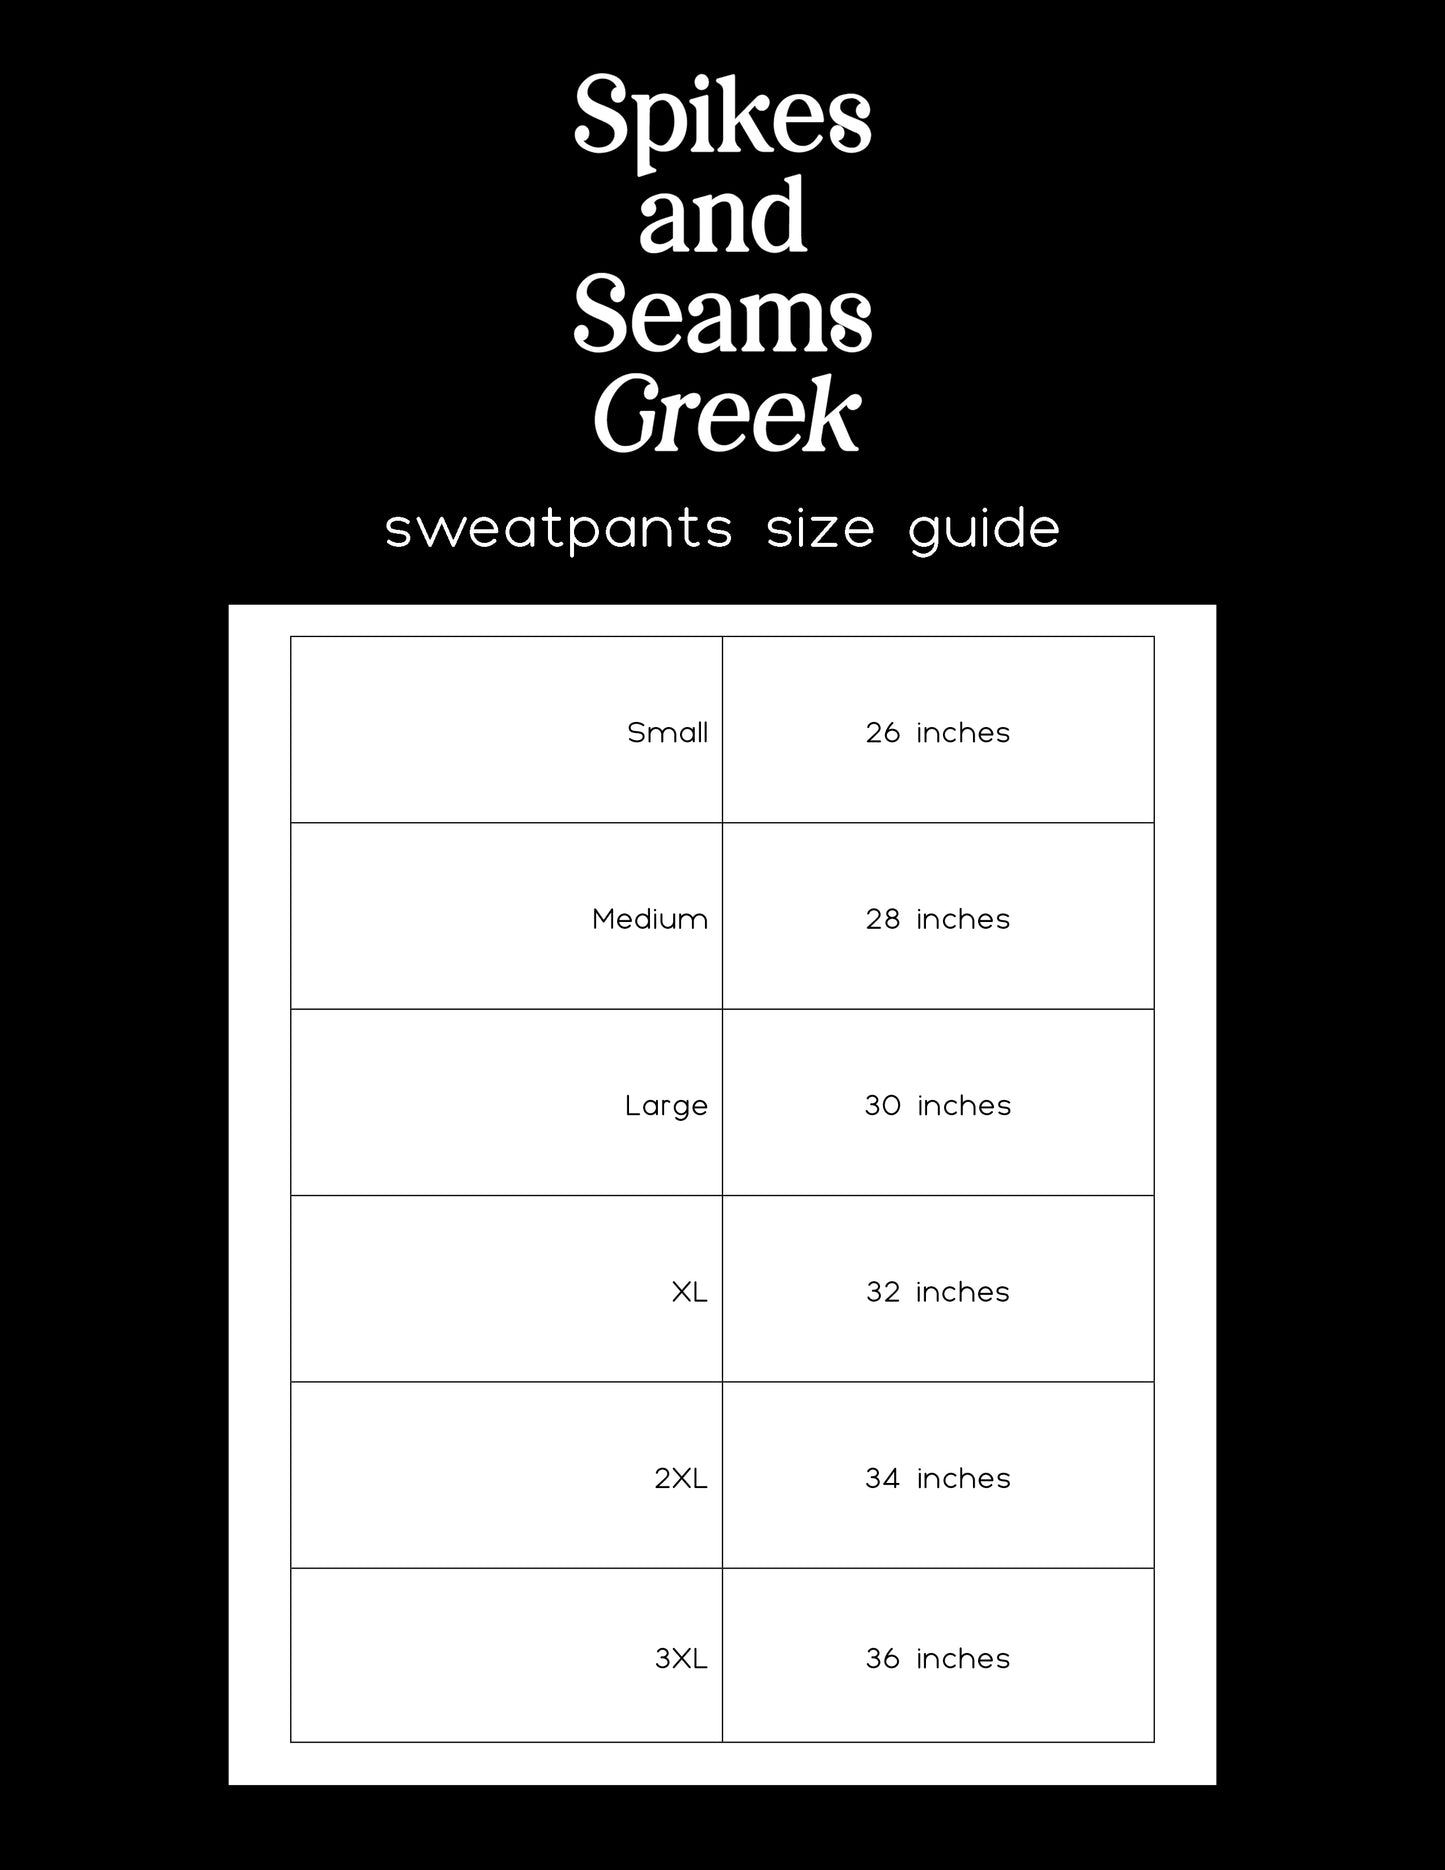 Black Groovy sweatpants - Sigma Delta Tau